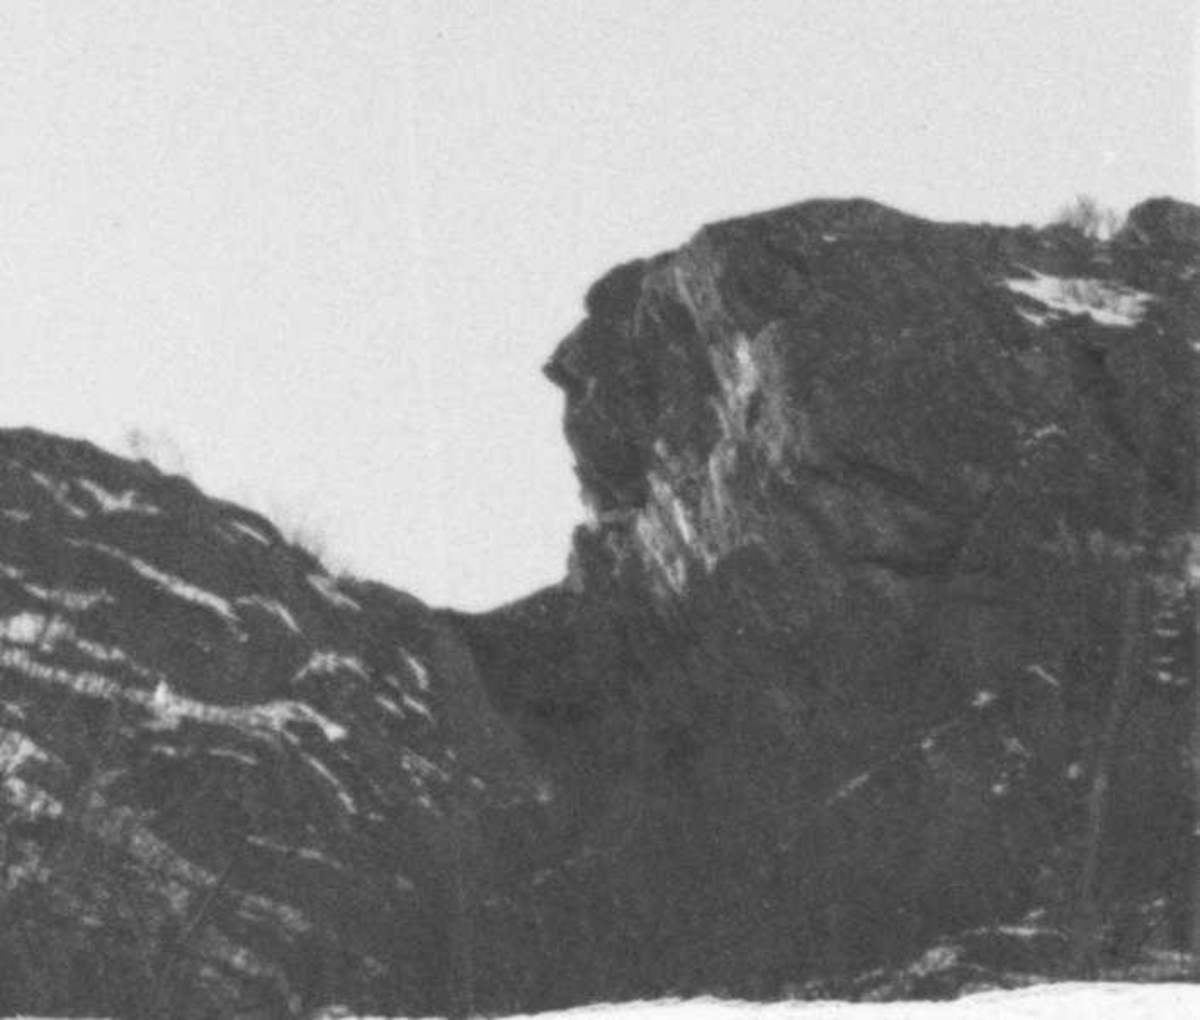 Roald Amundsens profil i Brønnøy